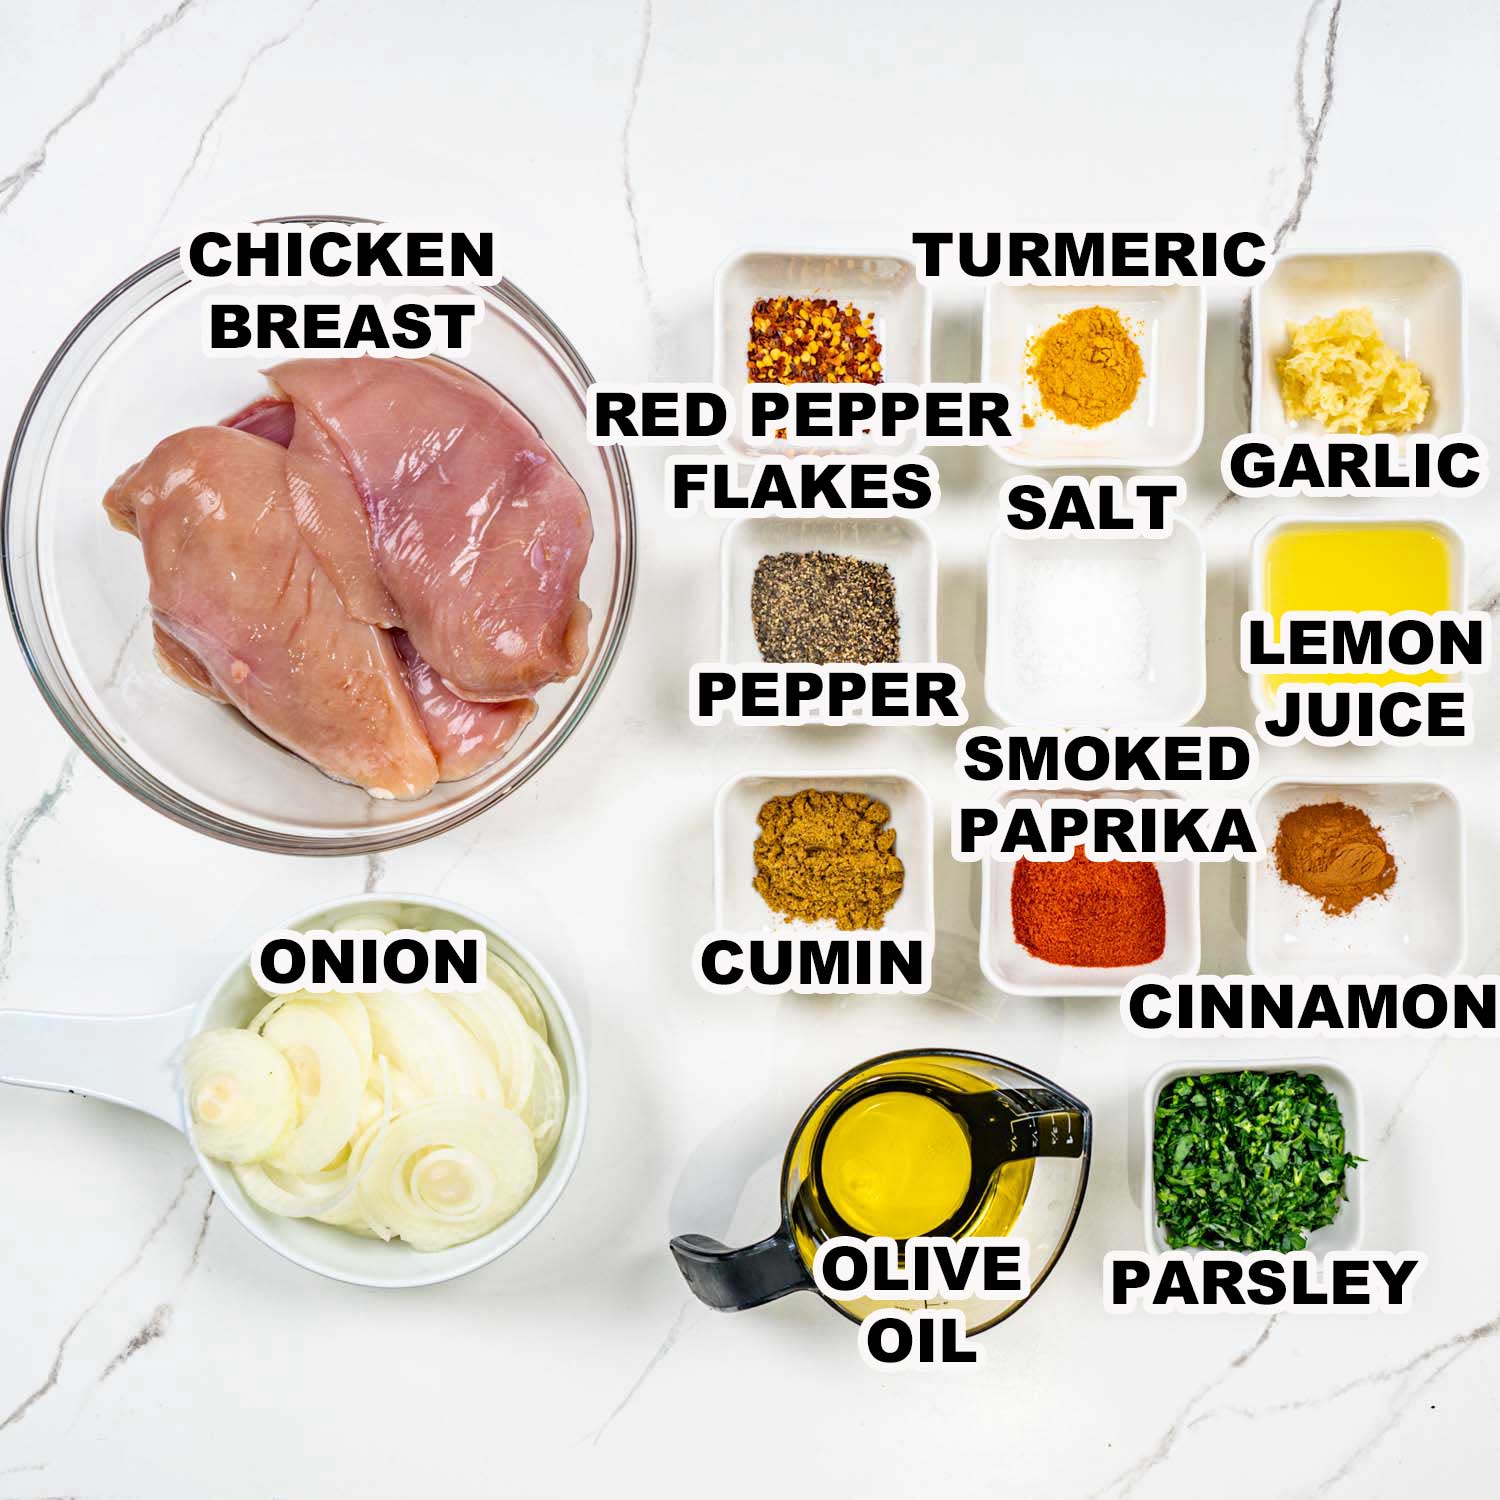 ingredients needed to make chicken shawarma.